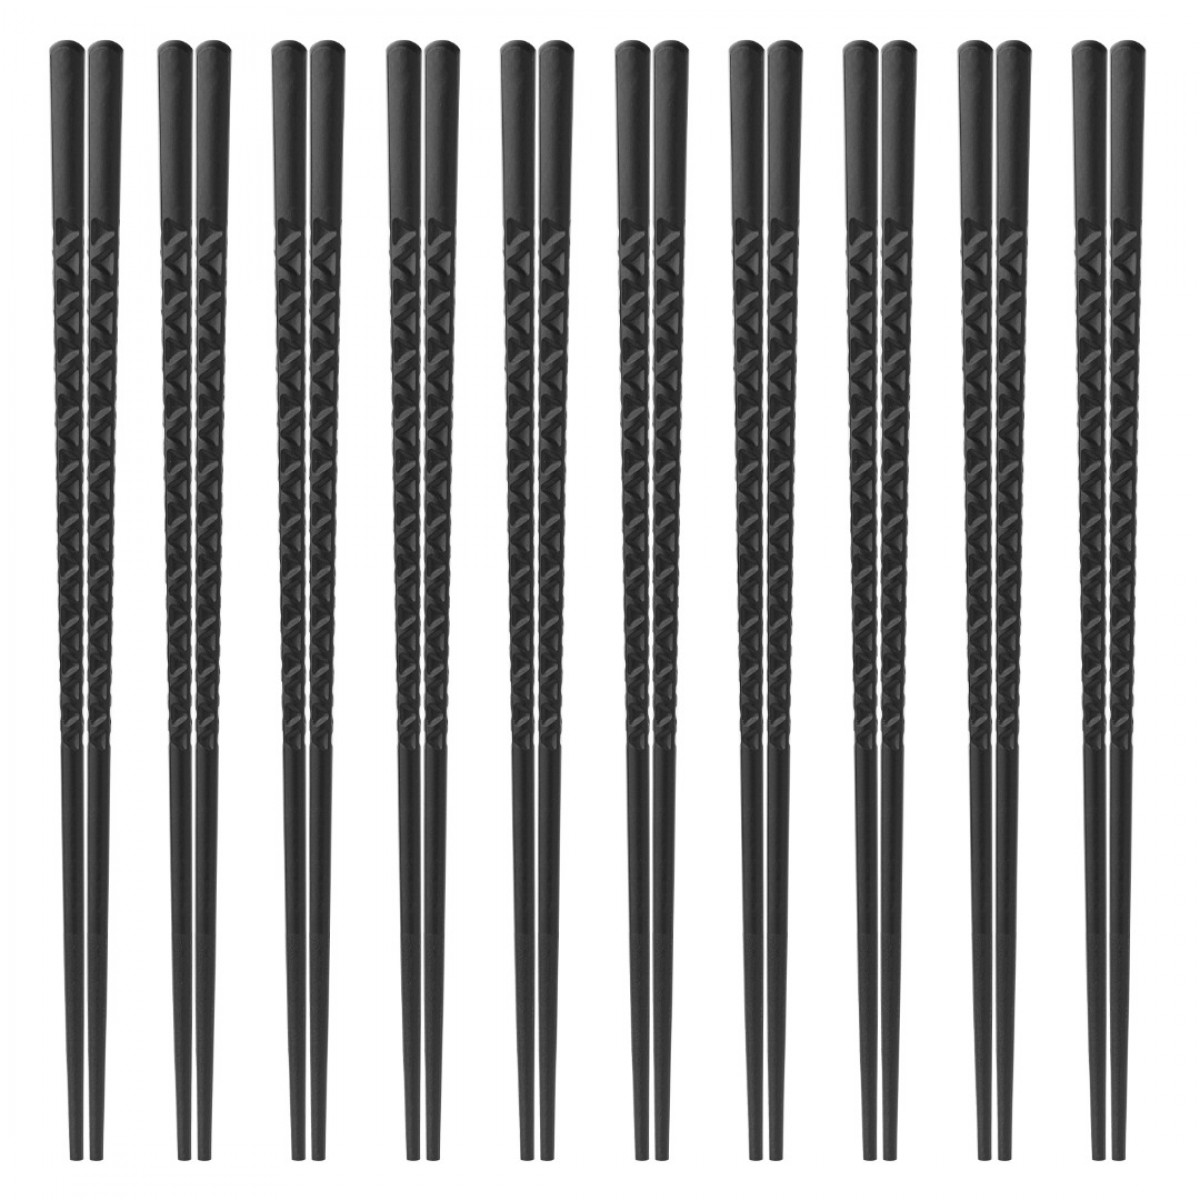 Ohtomber Black Fiberglass Chopsticks Reusable - 10 Pairs 9.5 Inch Chop Sticks Pack Reusable Dishwash